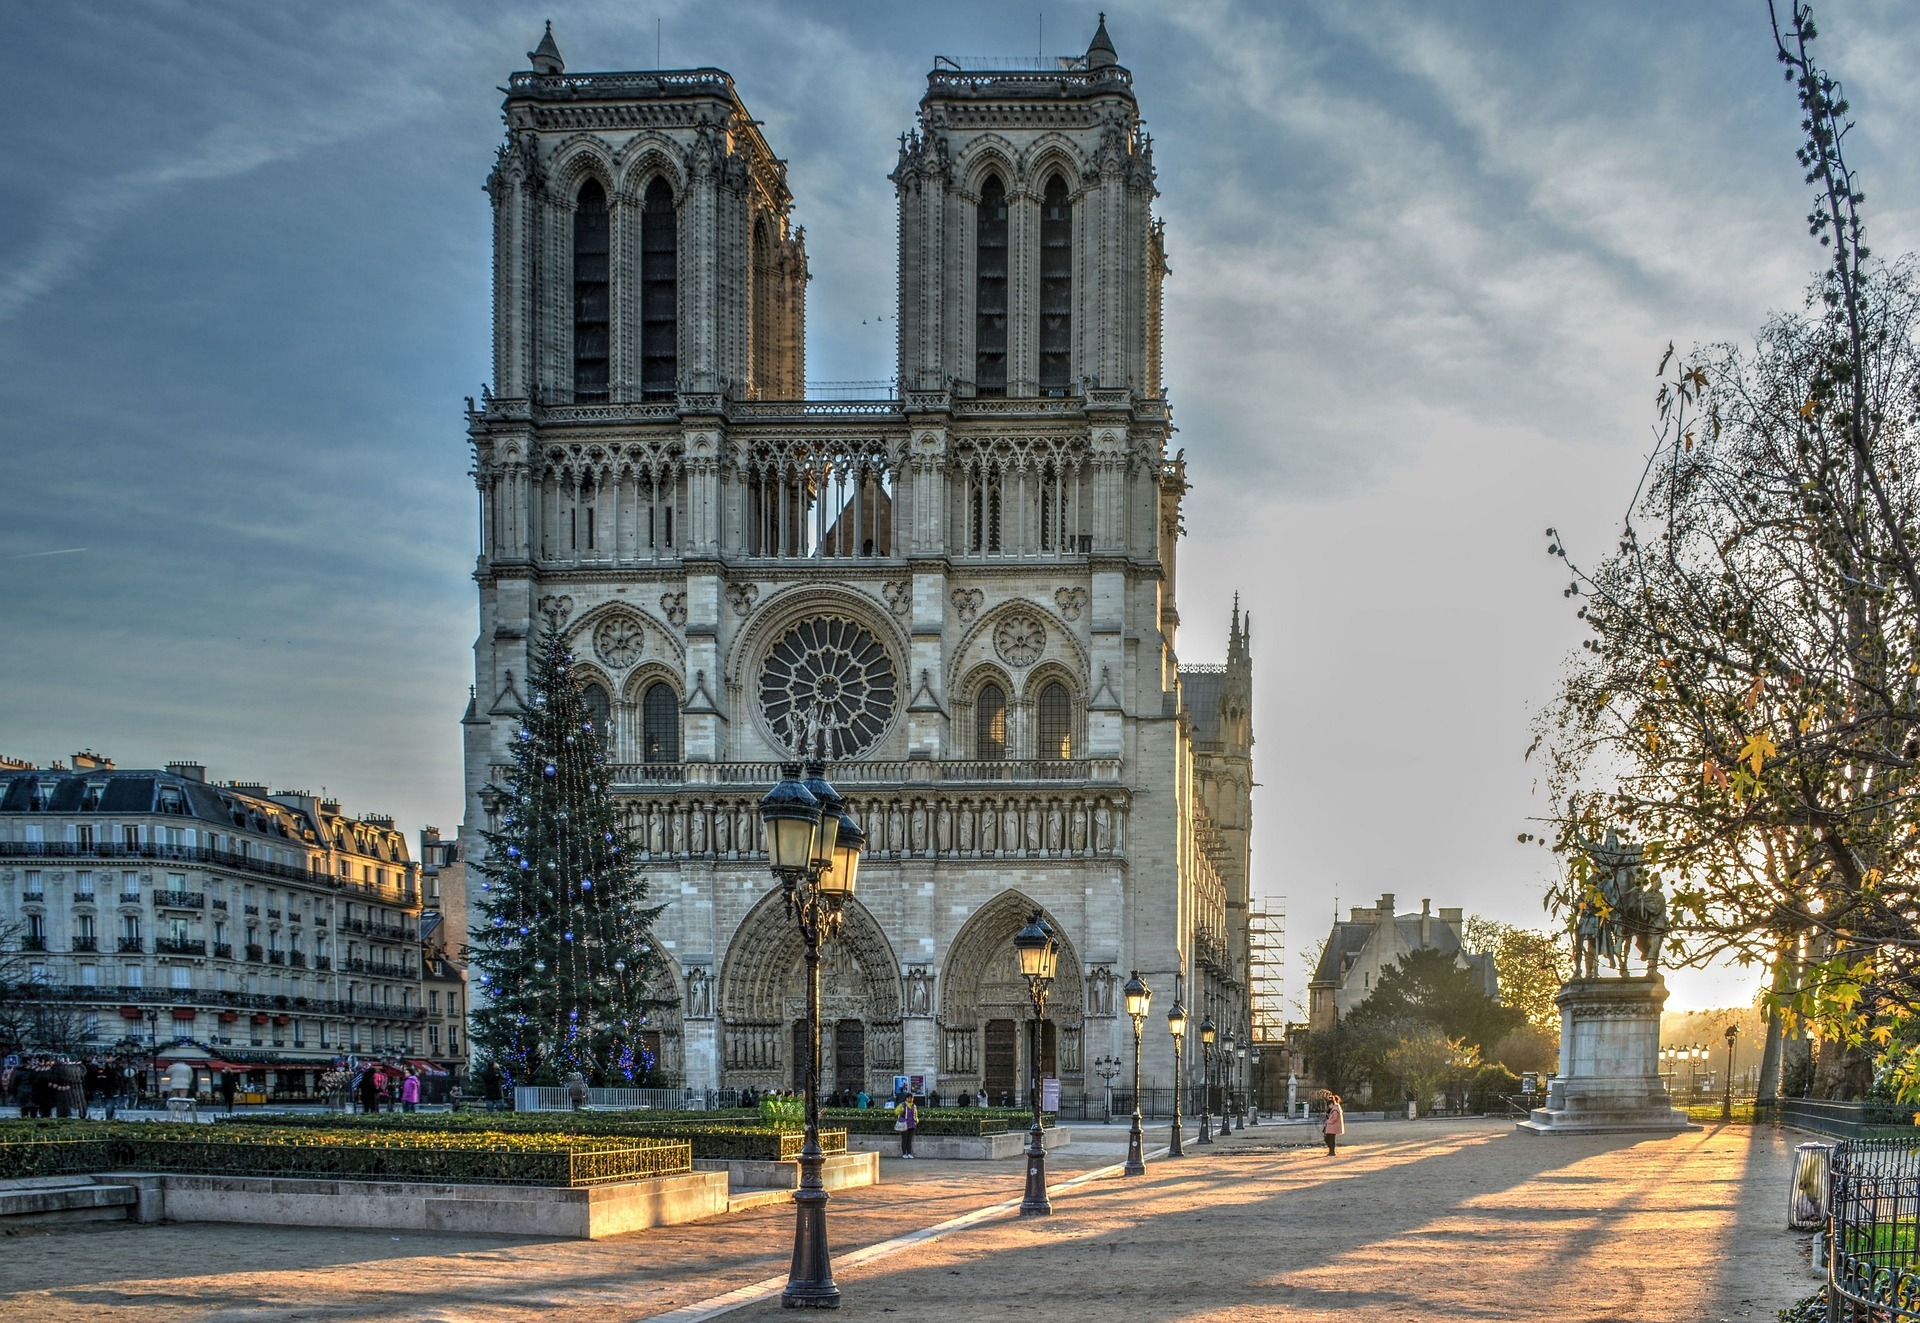 Notre-Dame a must-visit in Paris